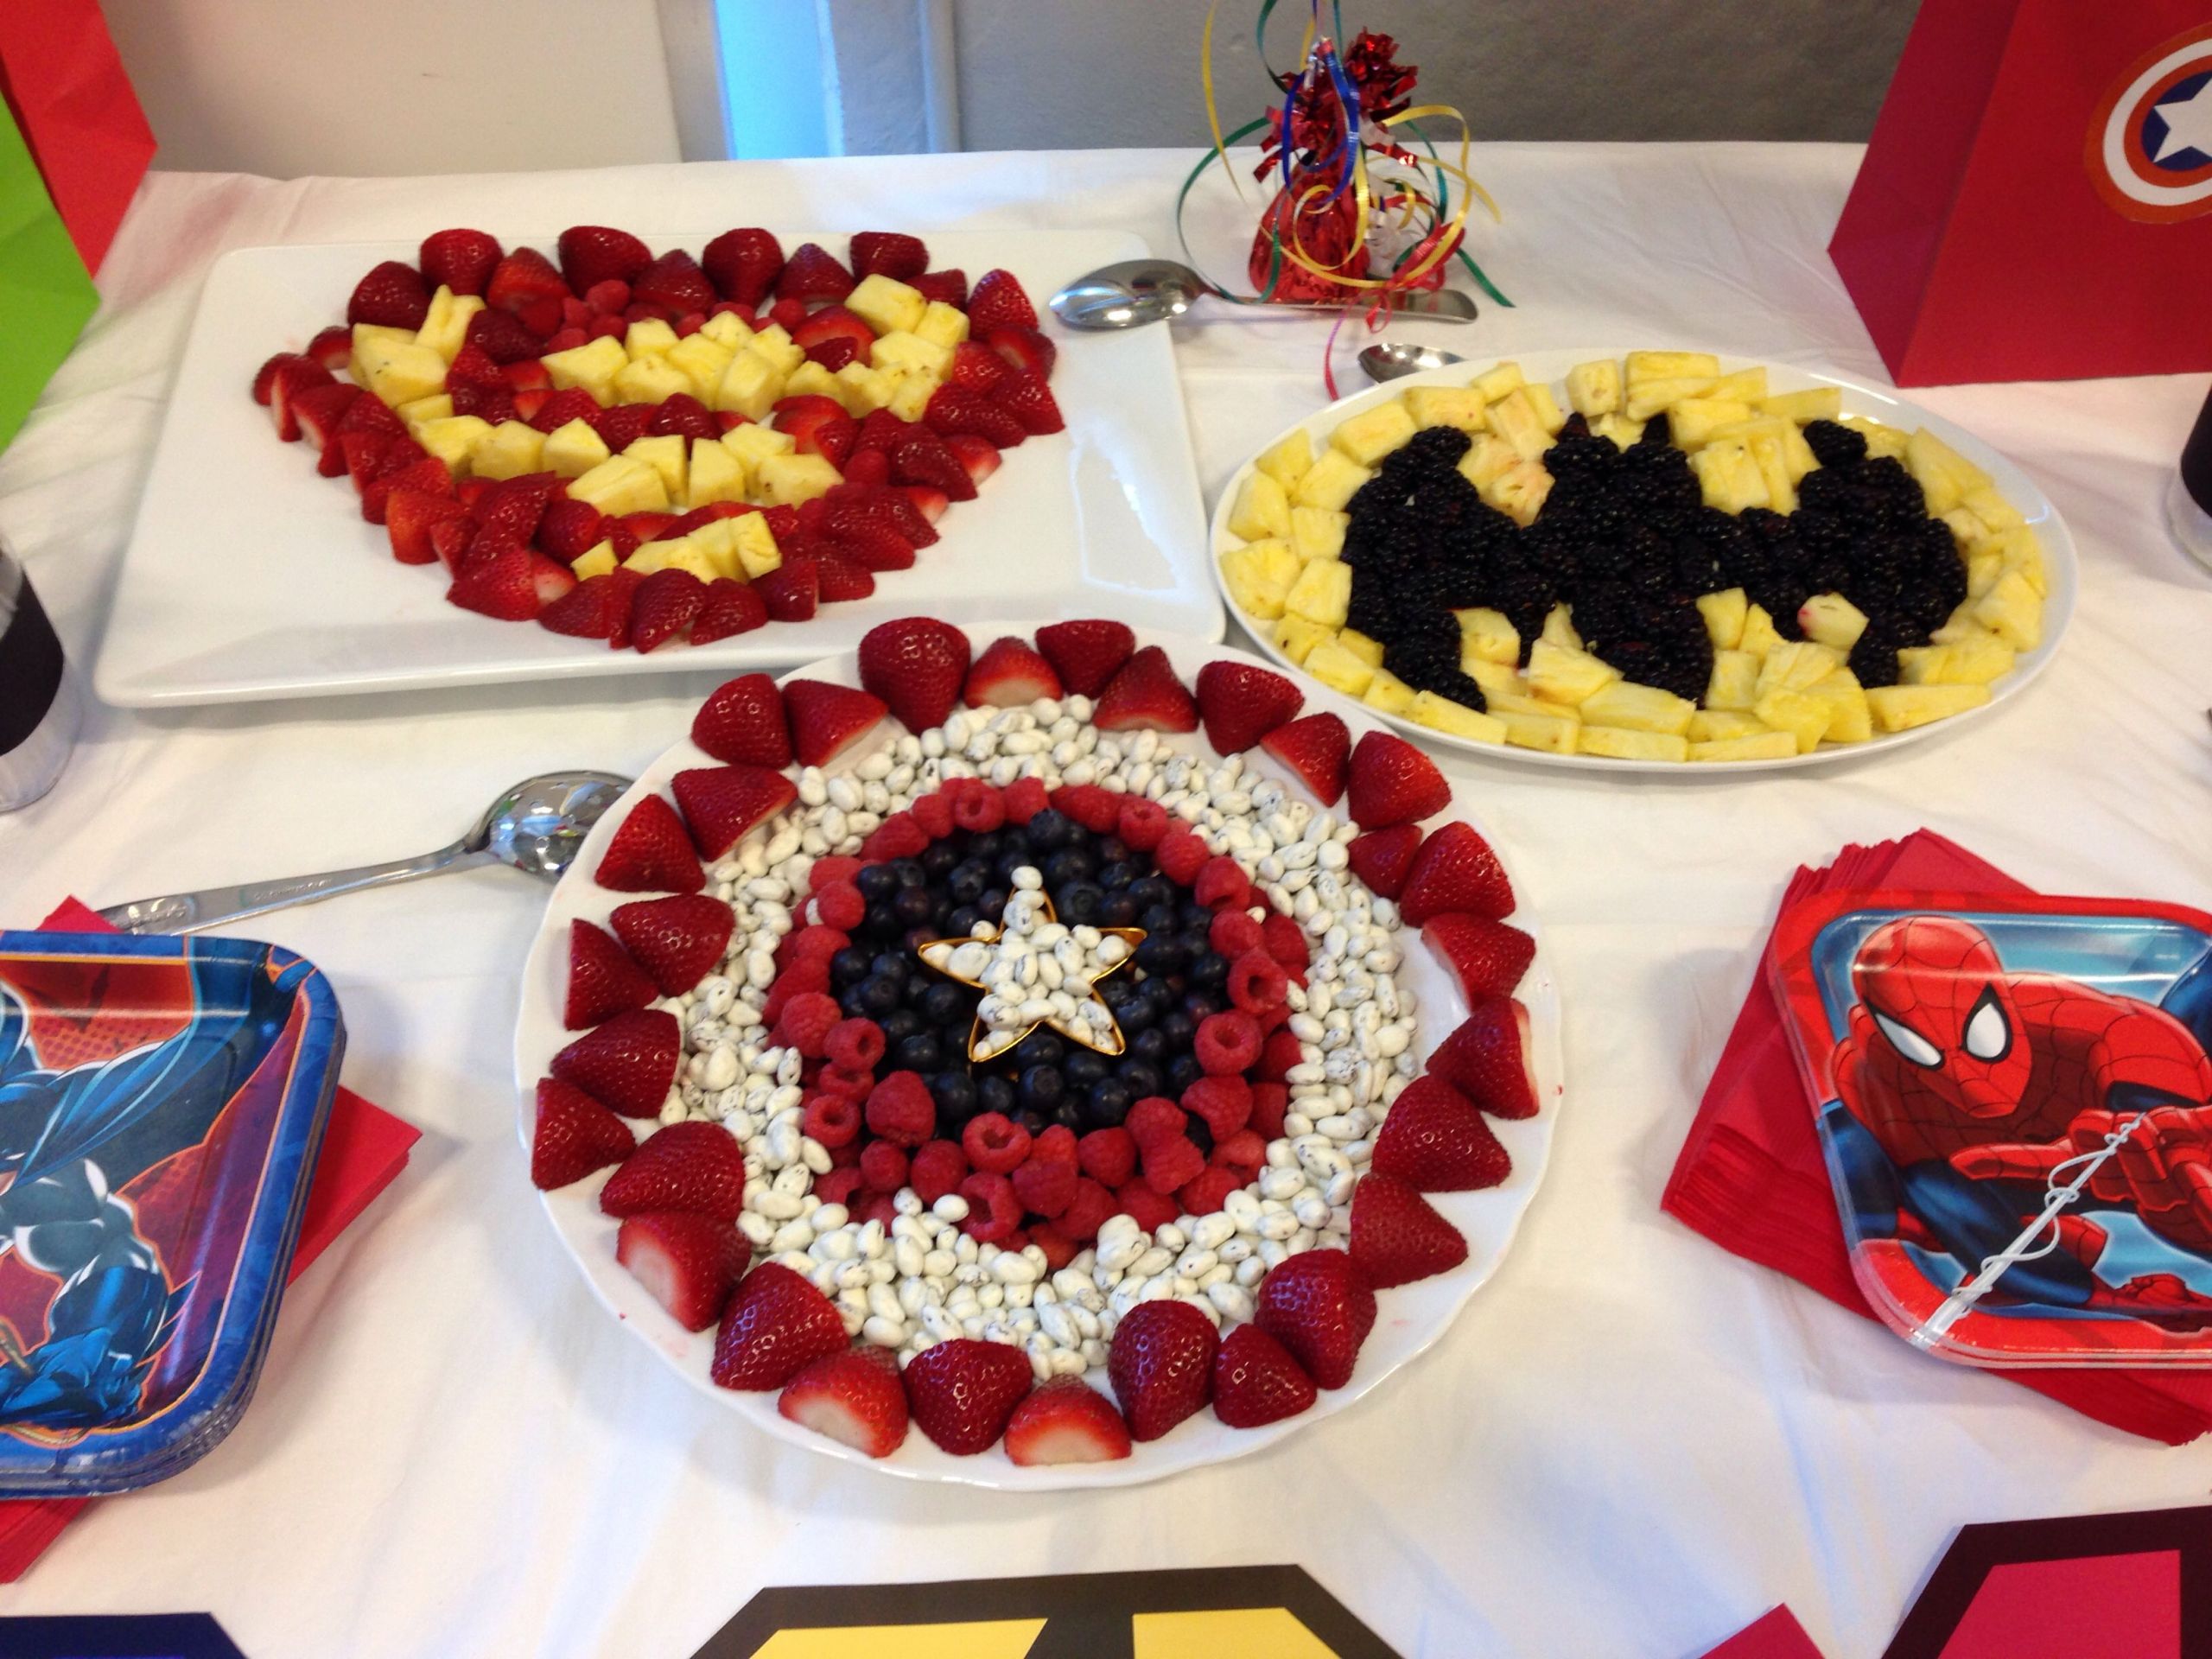 Superhero Birthday Party Food Ideas
 Superhero fruit trays